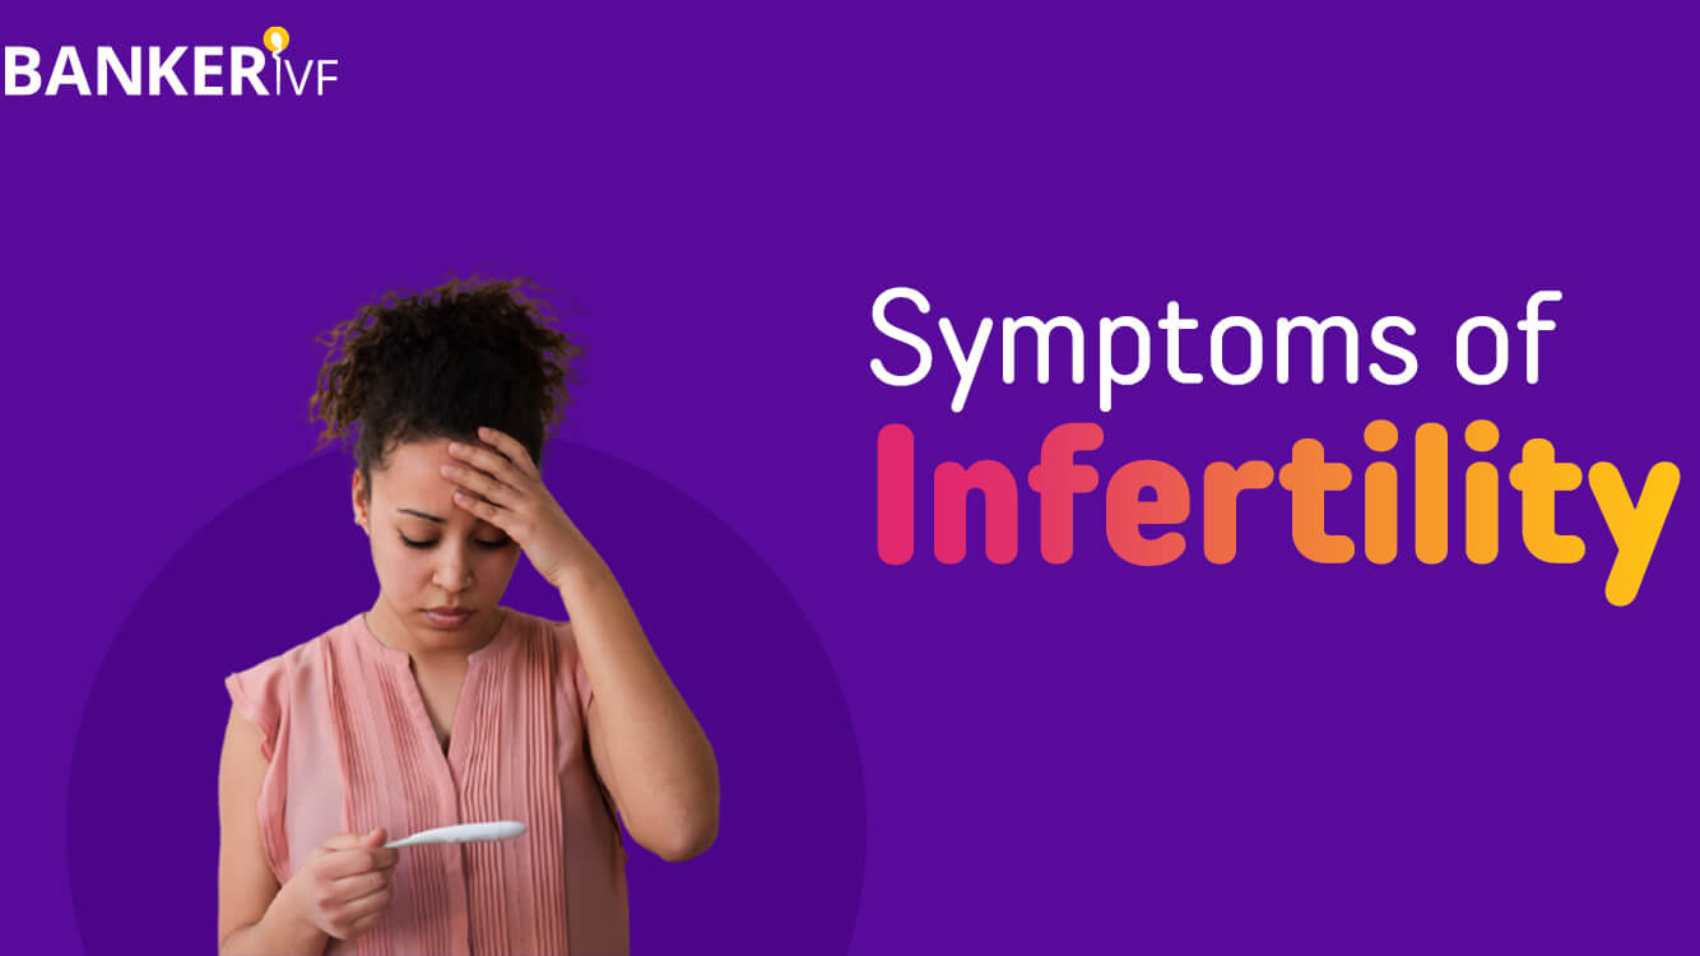 7-Symptoms-of-Infertility-in-Females-Banker-IVF-02-1